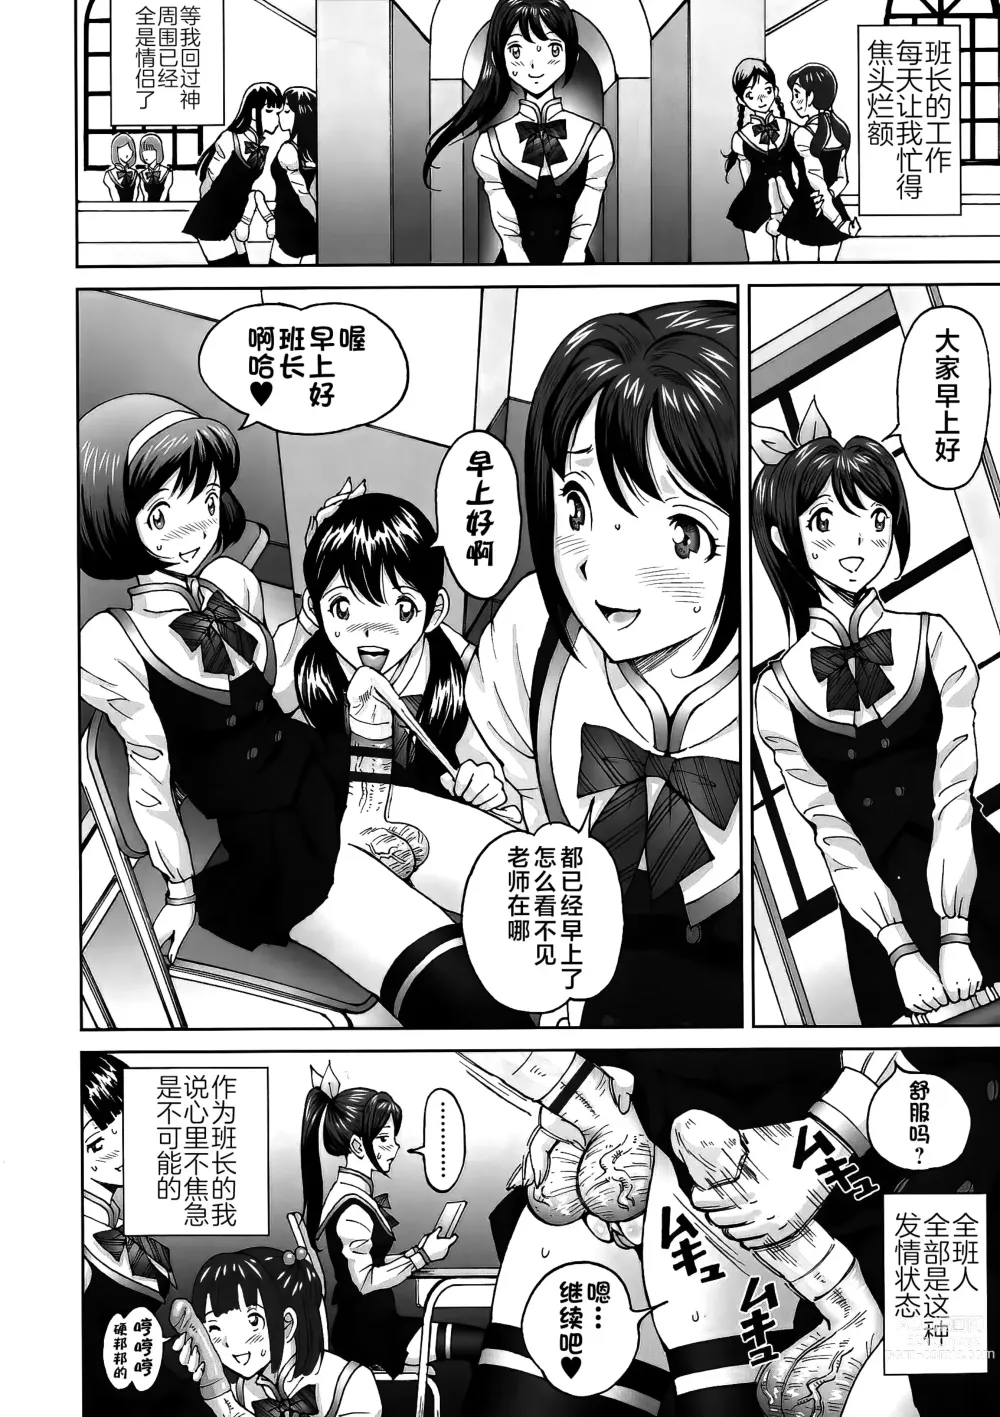 Page 4 of manga エンジョイNEWライフ 1-2